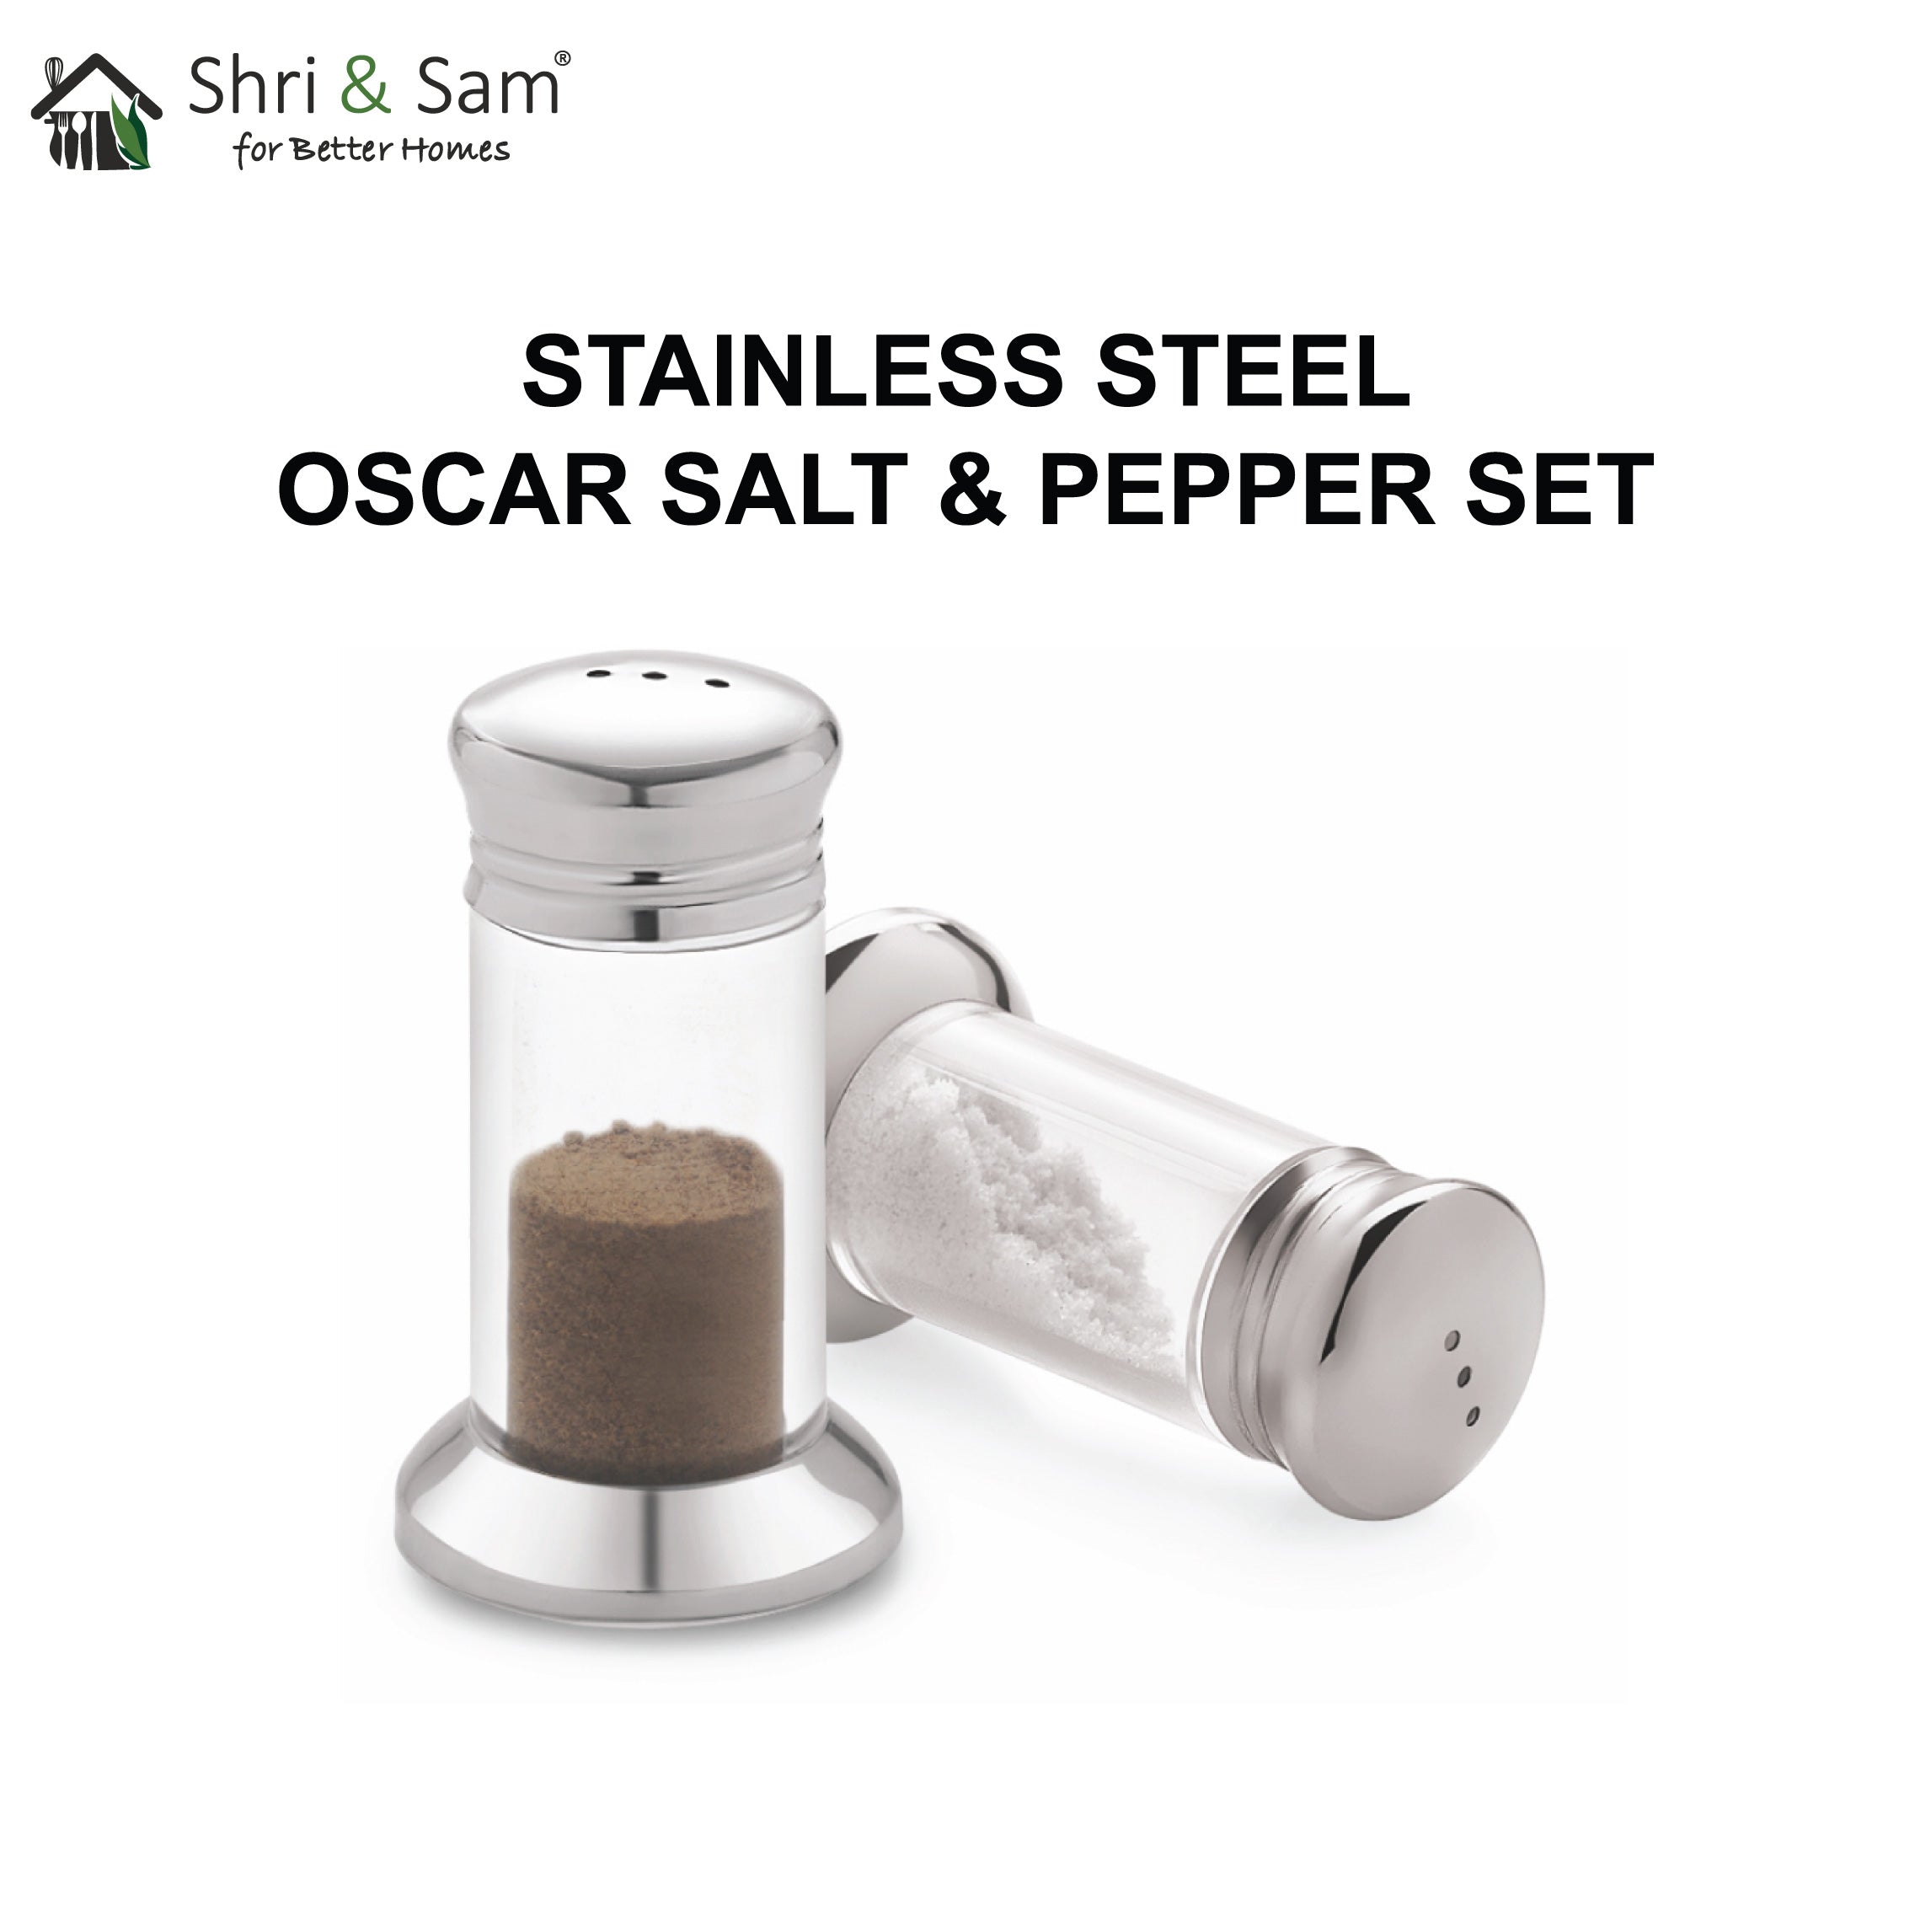 Stainless Steel Oscar Salt & Pepper